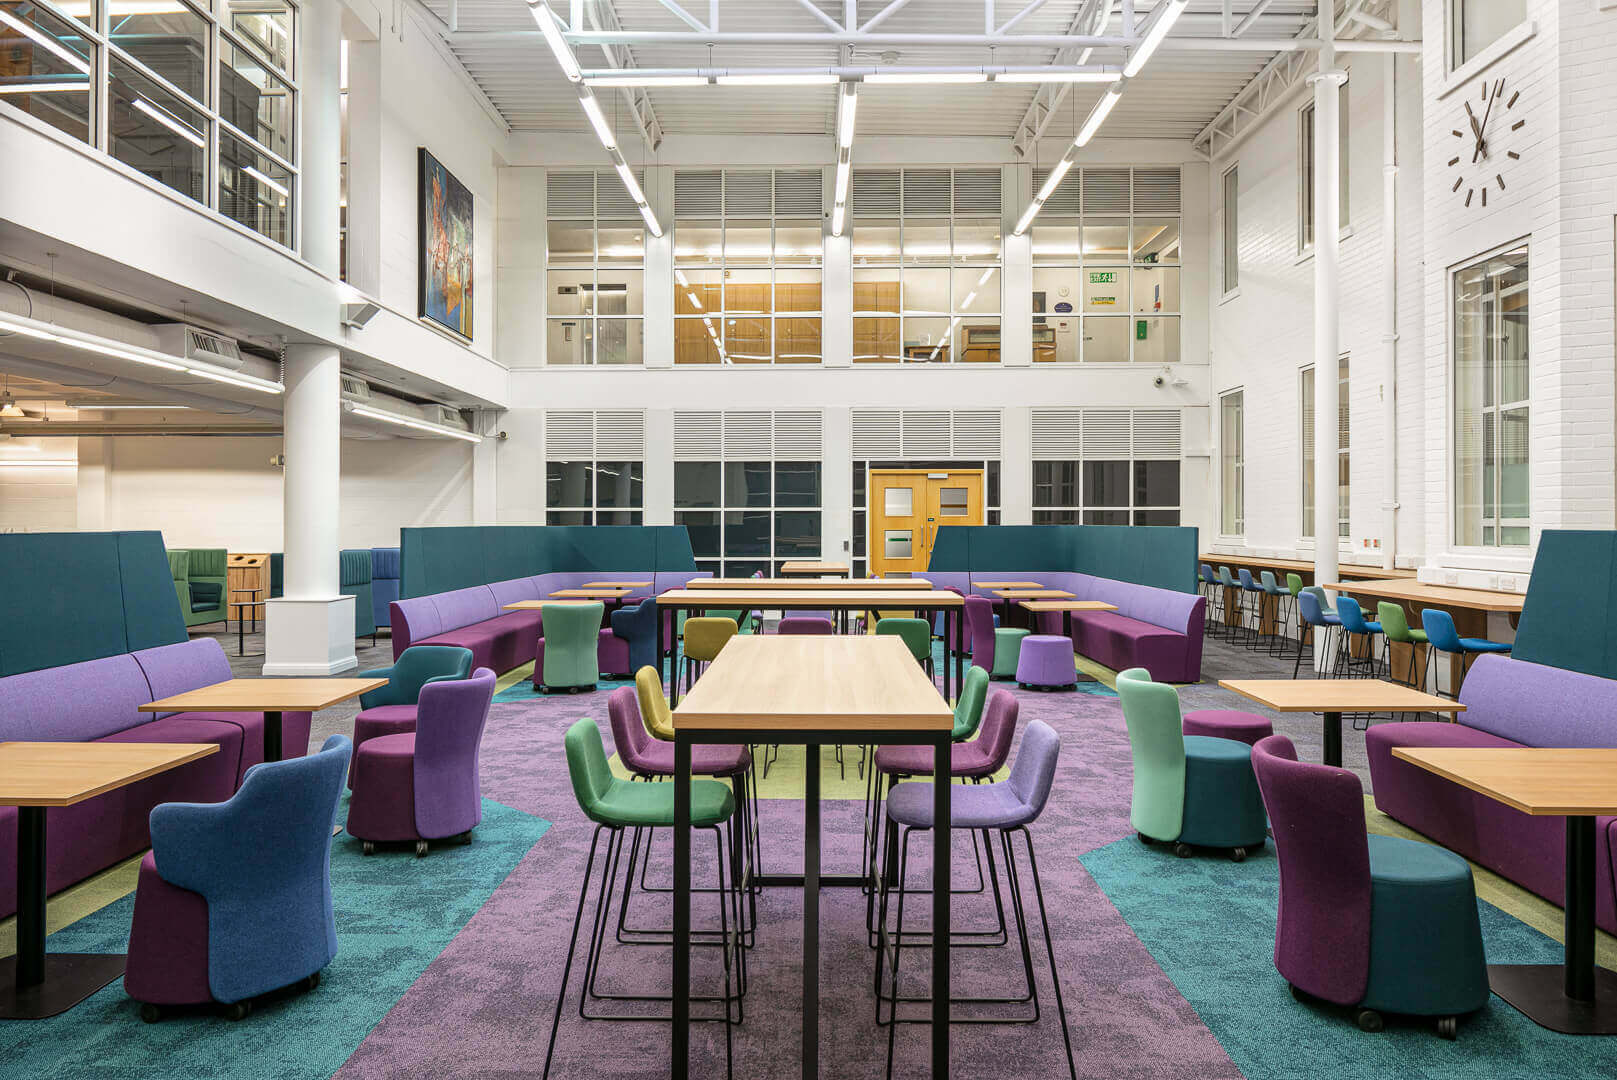 Commercial Interior photography - Brotherton West building refurbishment, University of Leeds